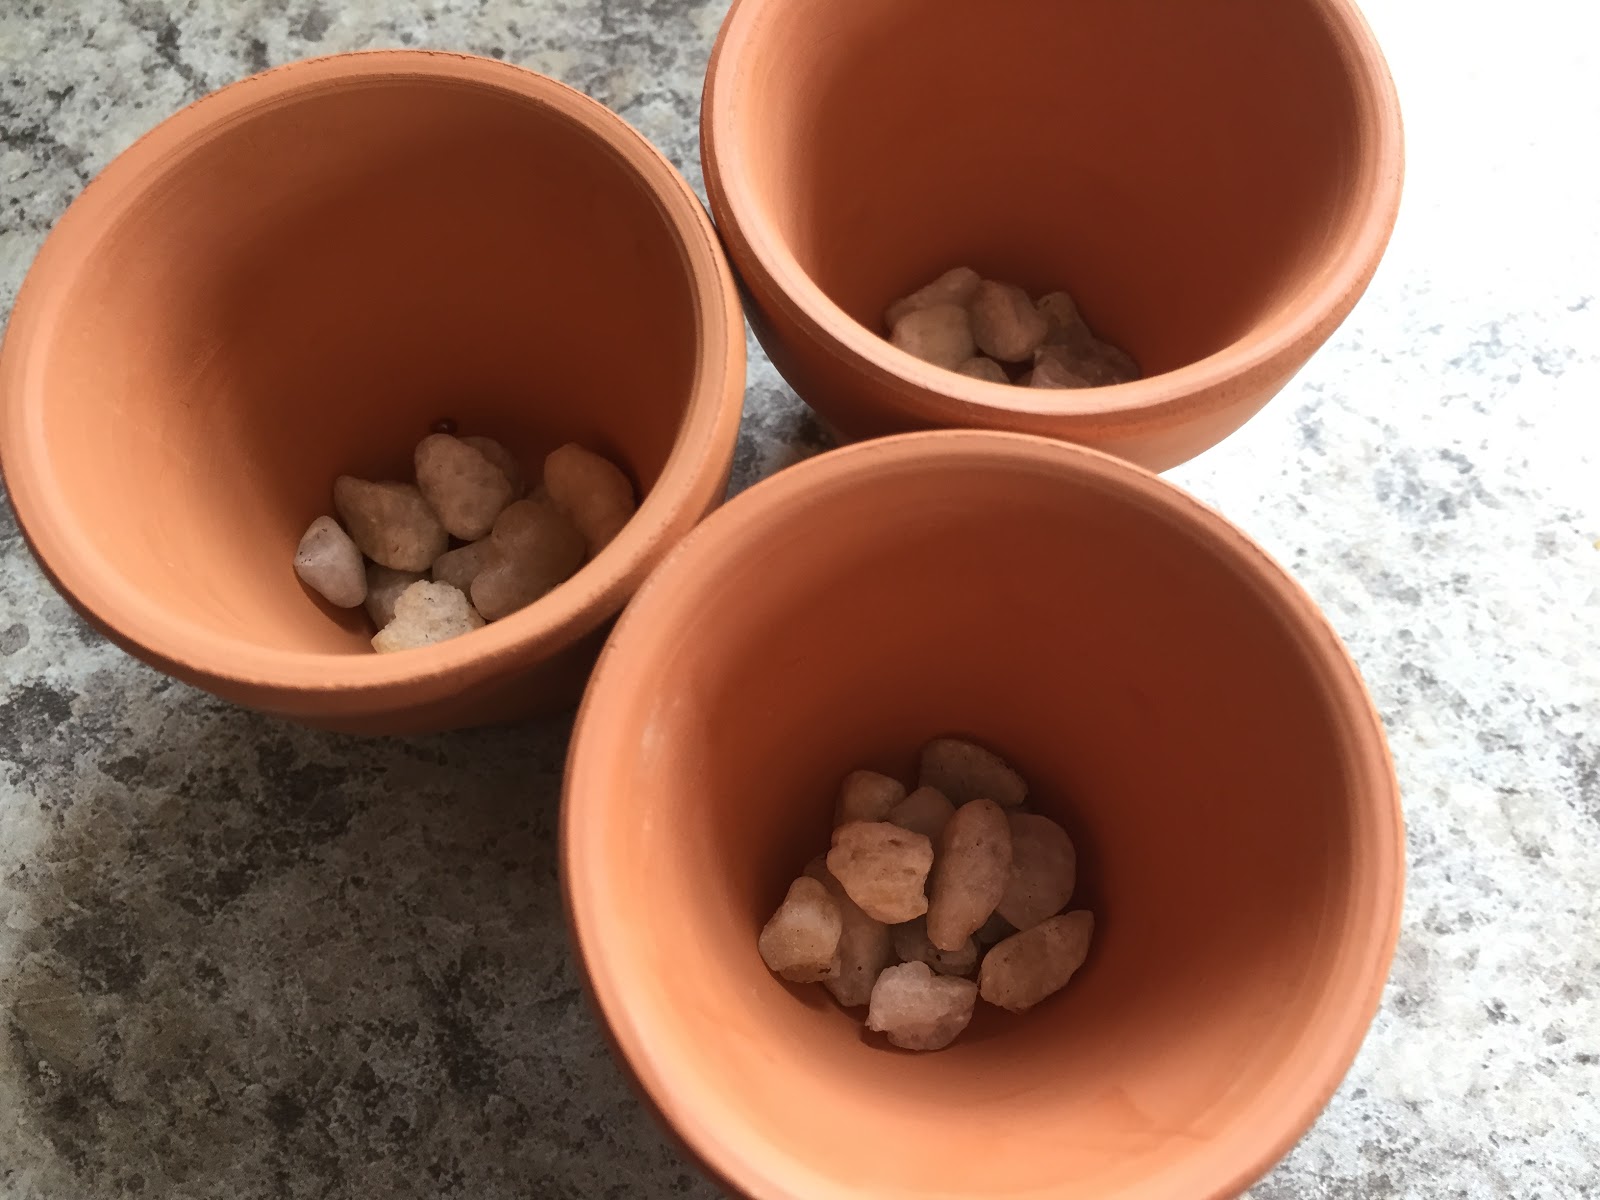 small rocks in bottom of pot